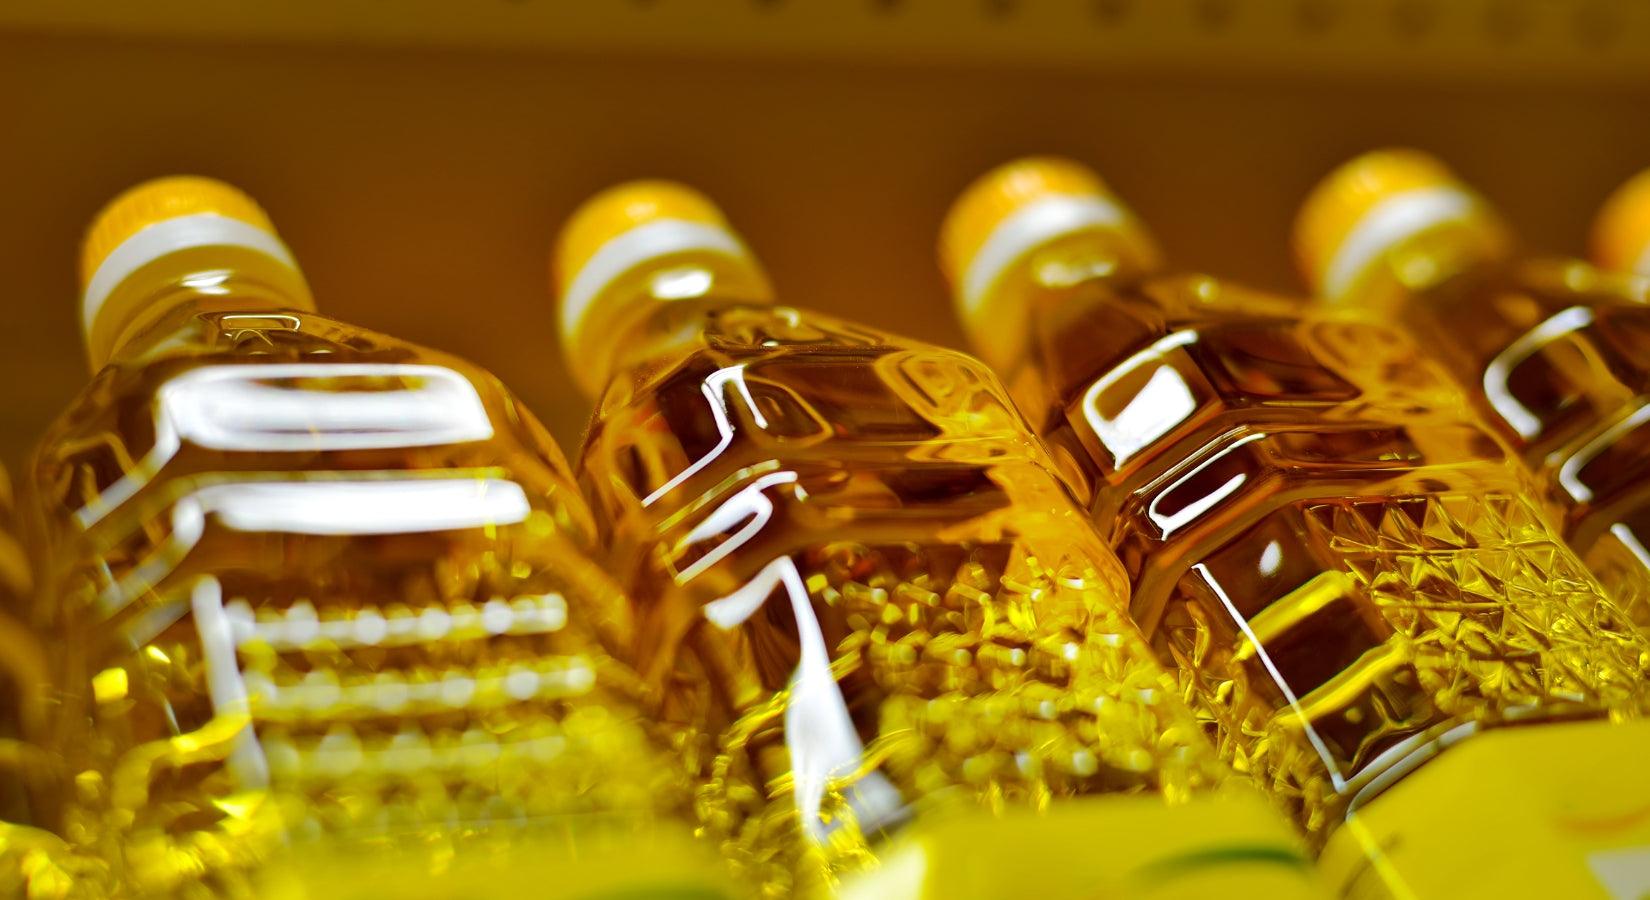 Iodine value measurement for cooking oil | Autotitrator - JM Science